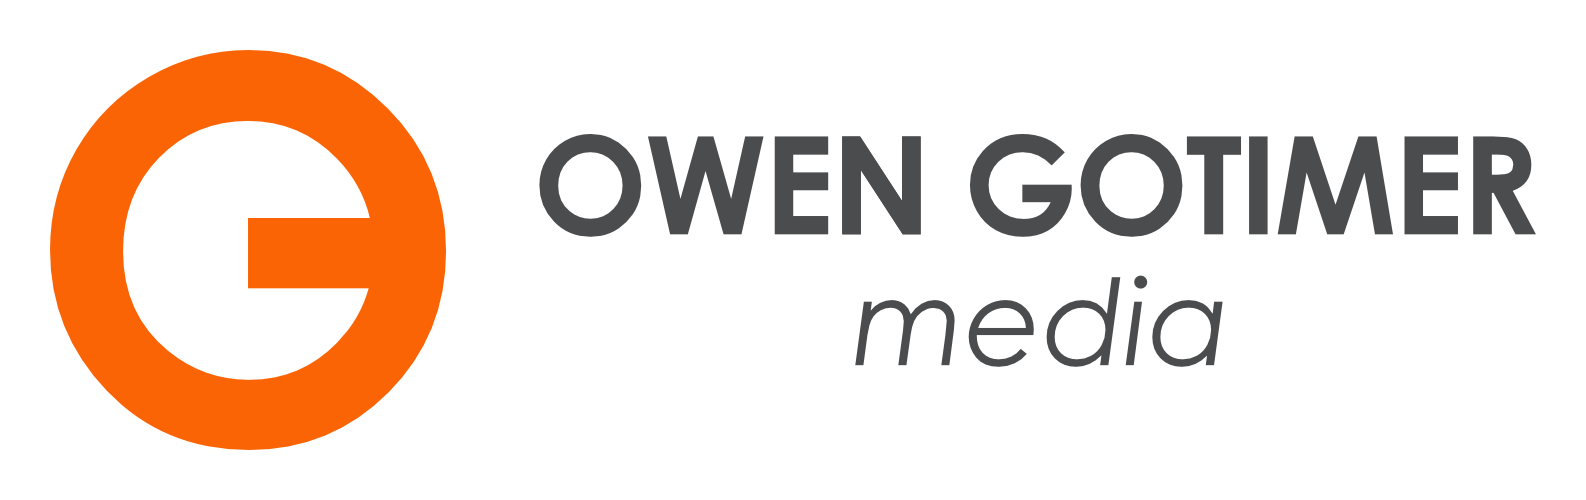 Owen Gotimer Media